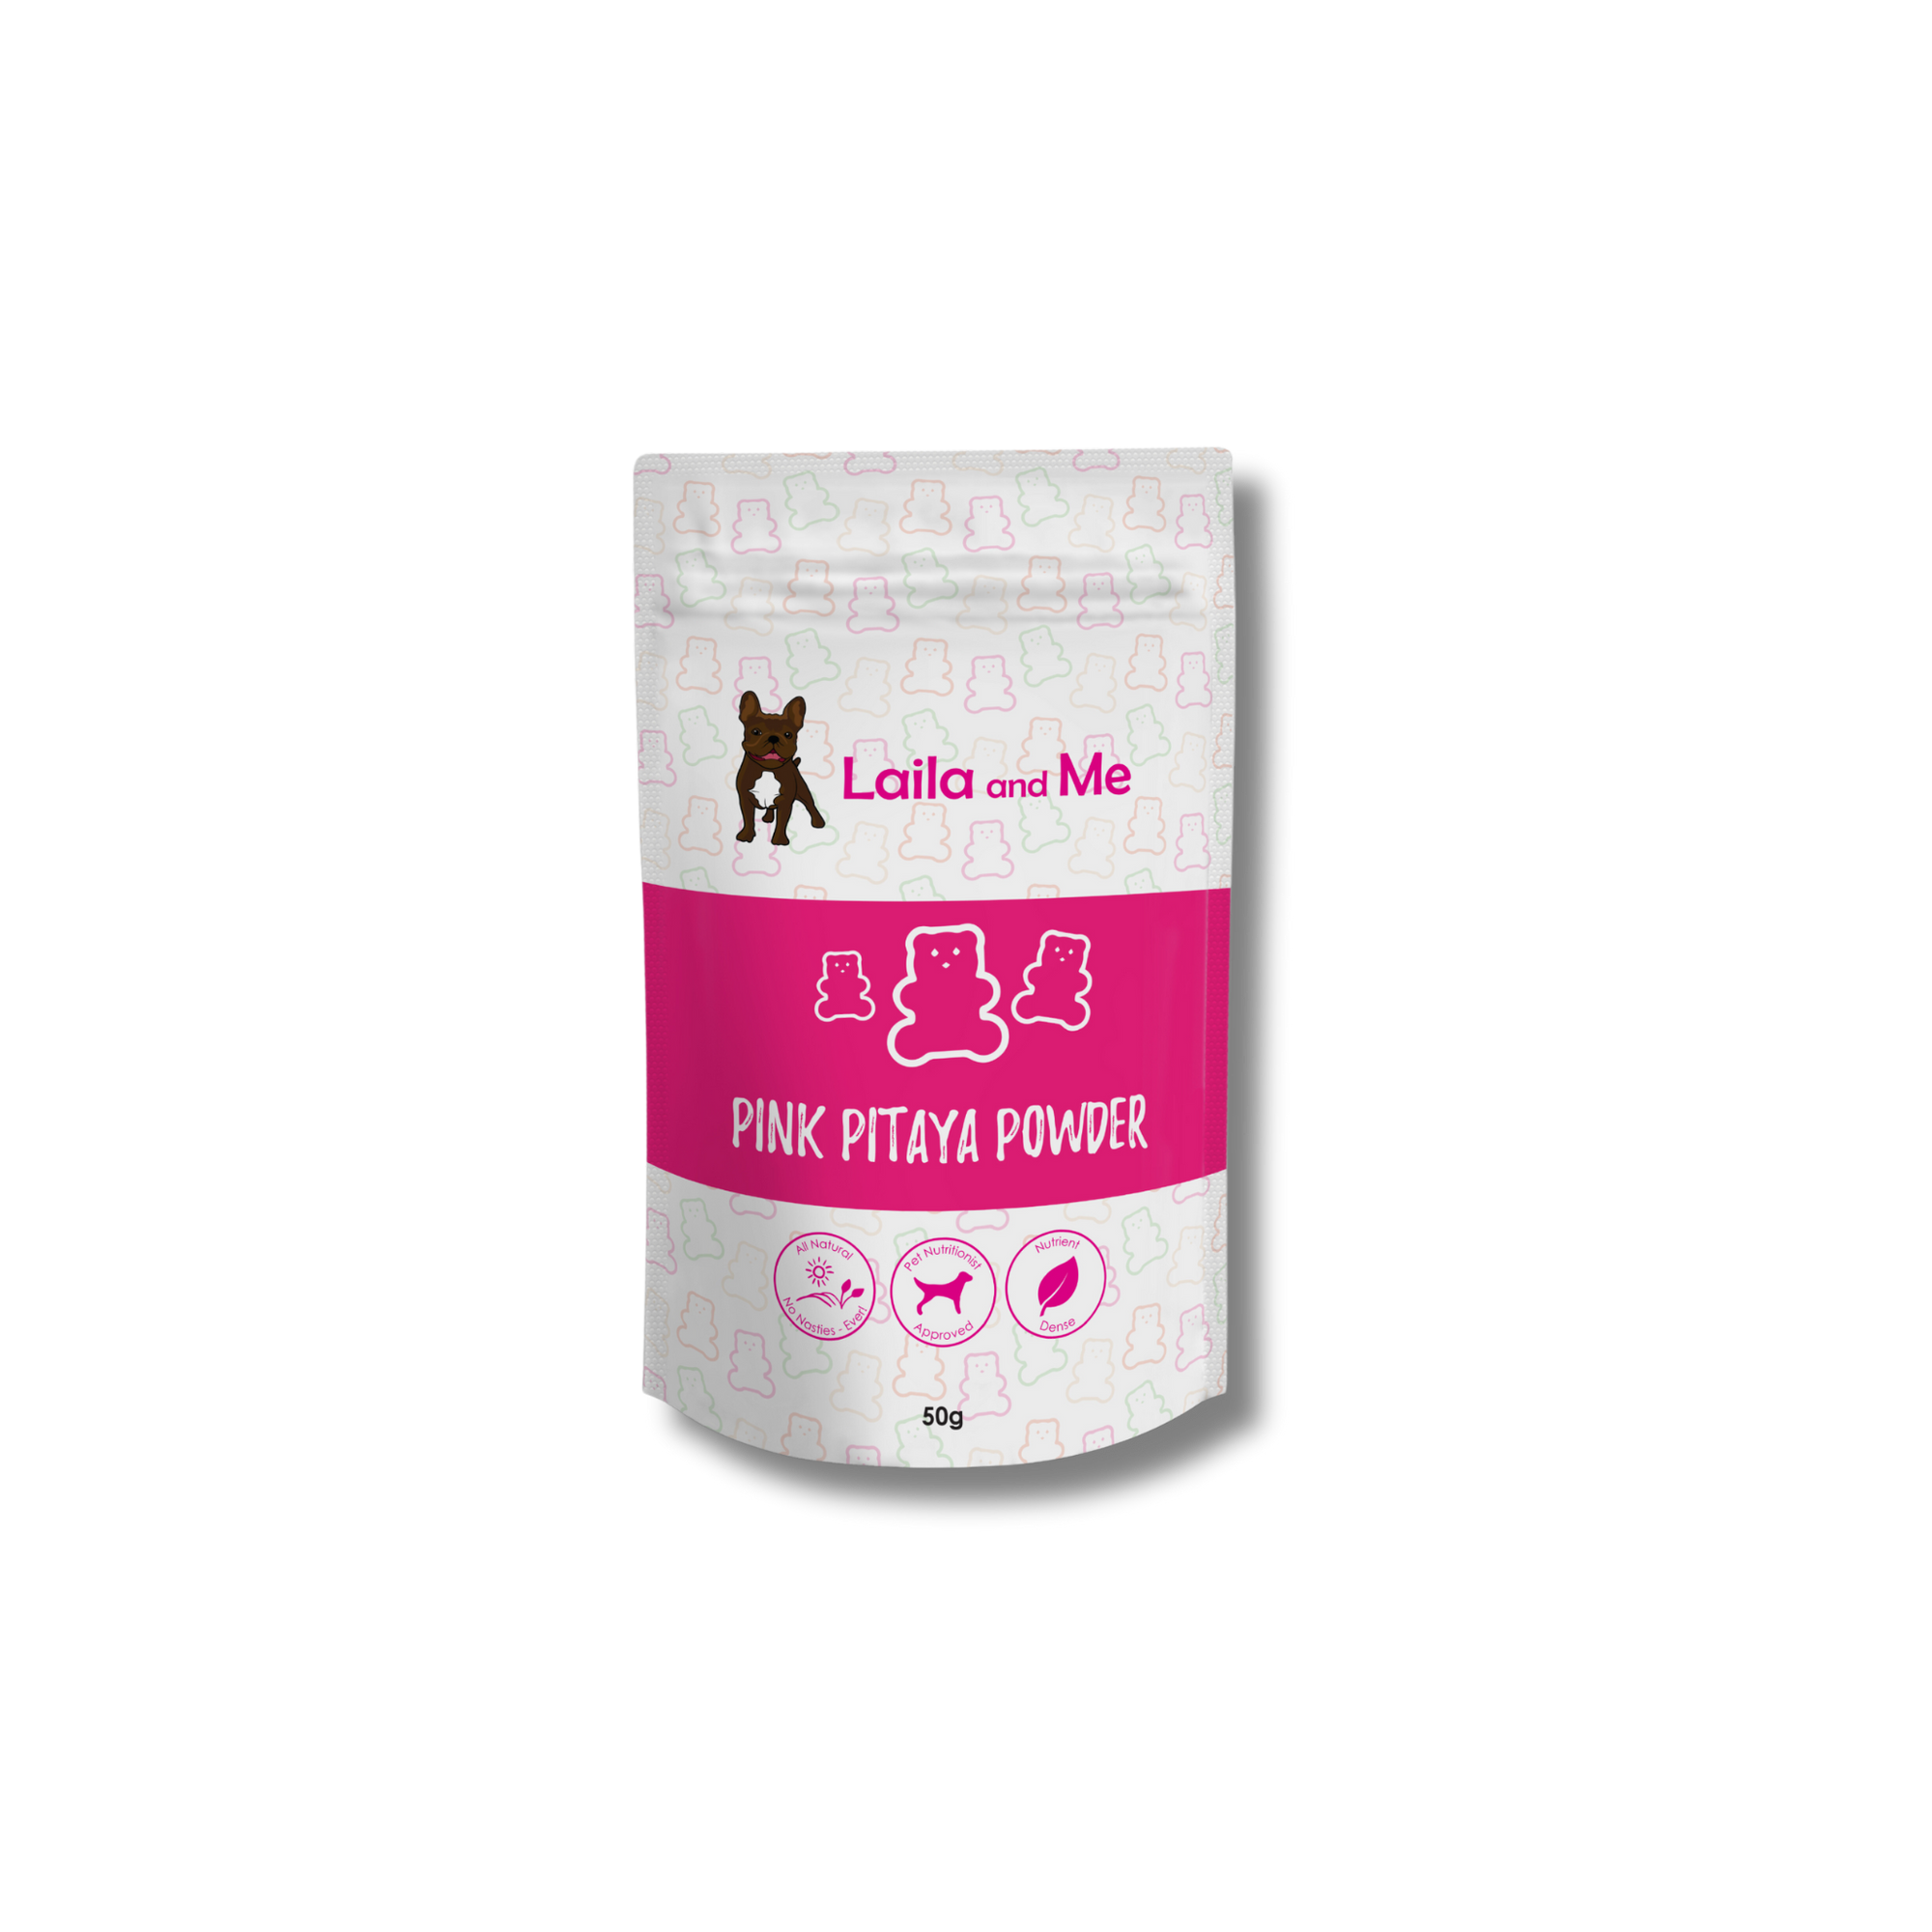 Pink Pitaya Powder for Pets - Laila and Me